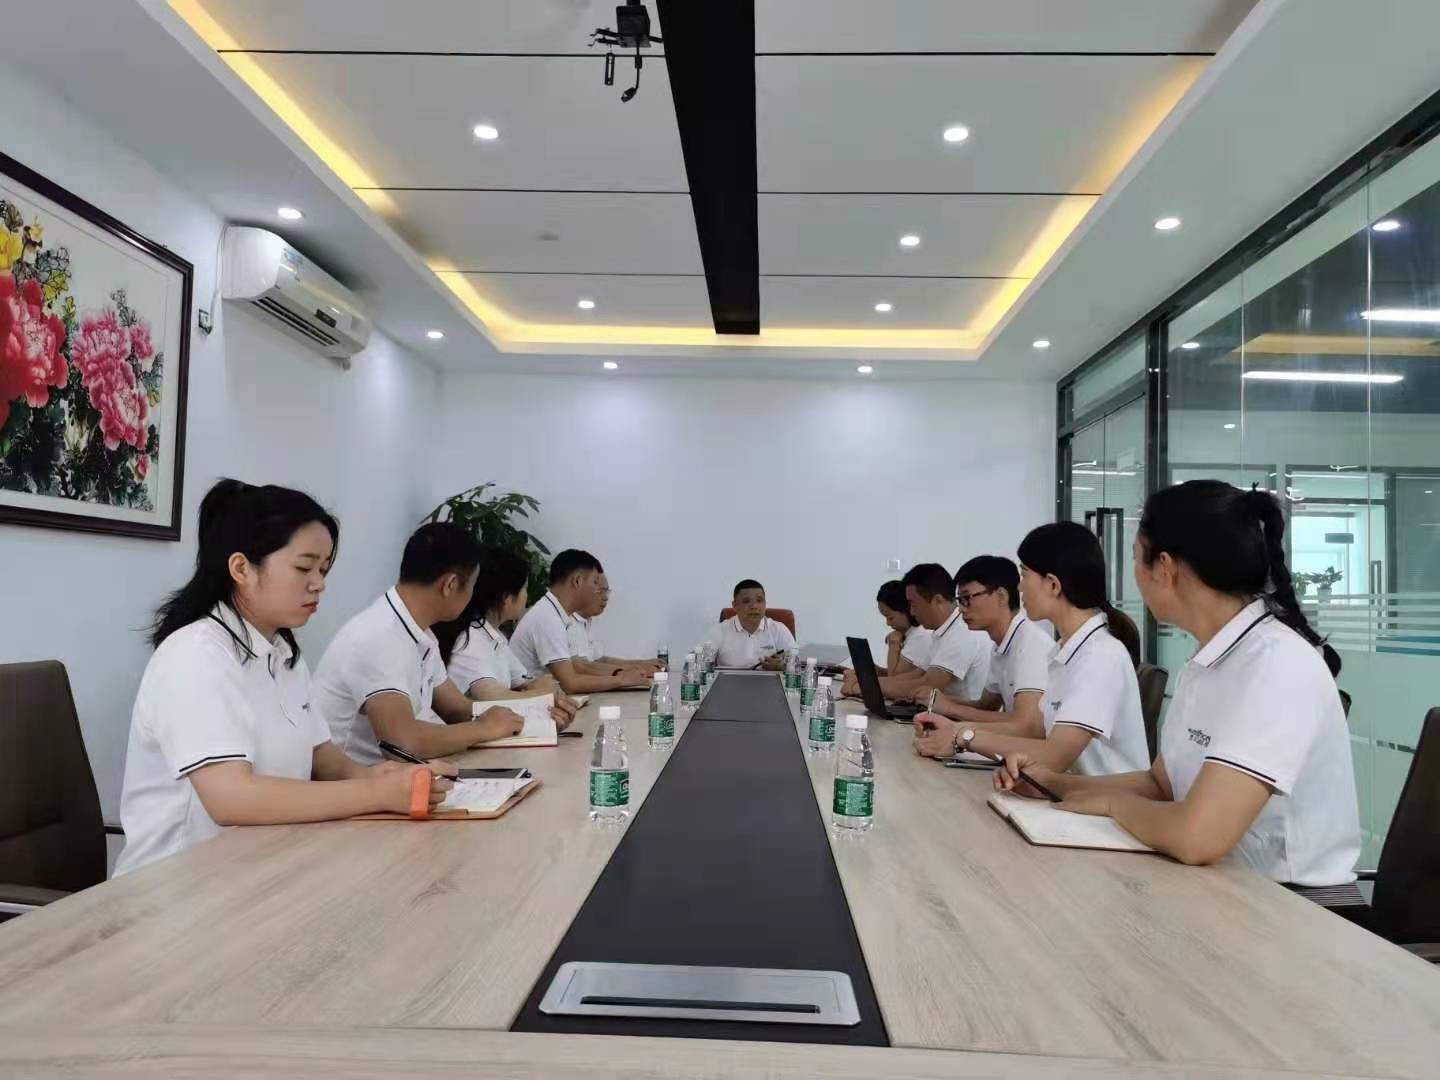 Shenzhen ChengHao Optoelectronic Co., Ltd.